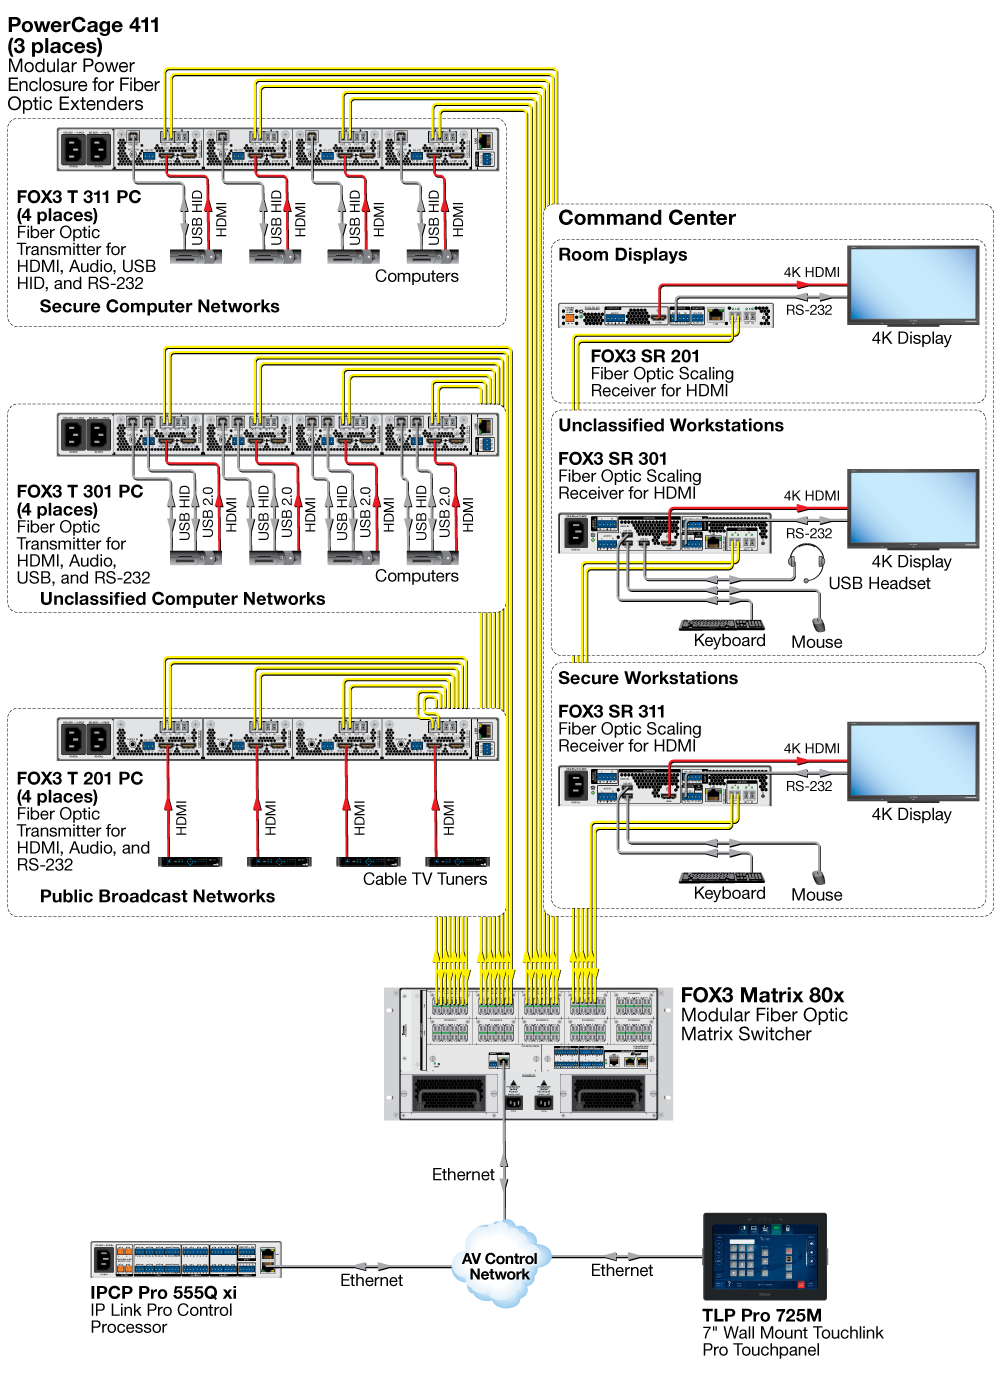 PowerCage 411 Diagram